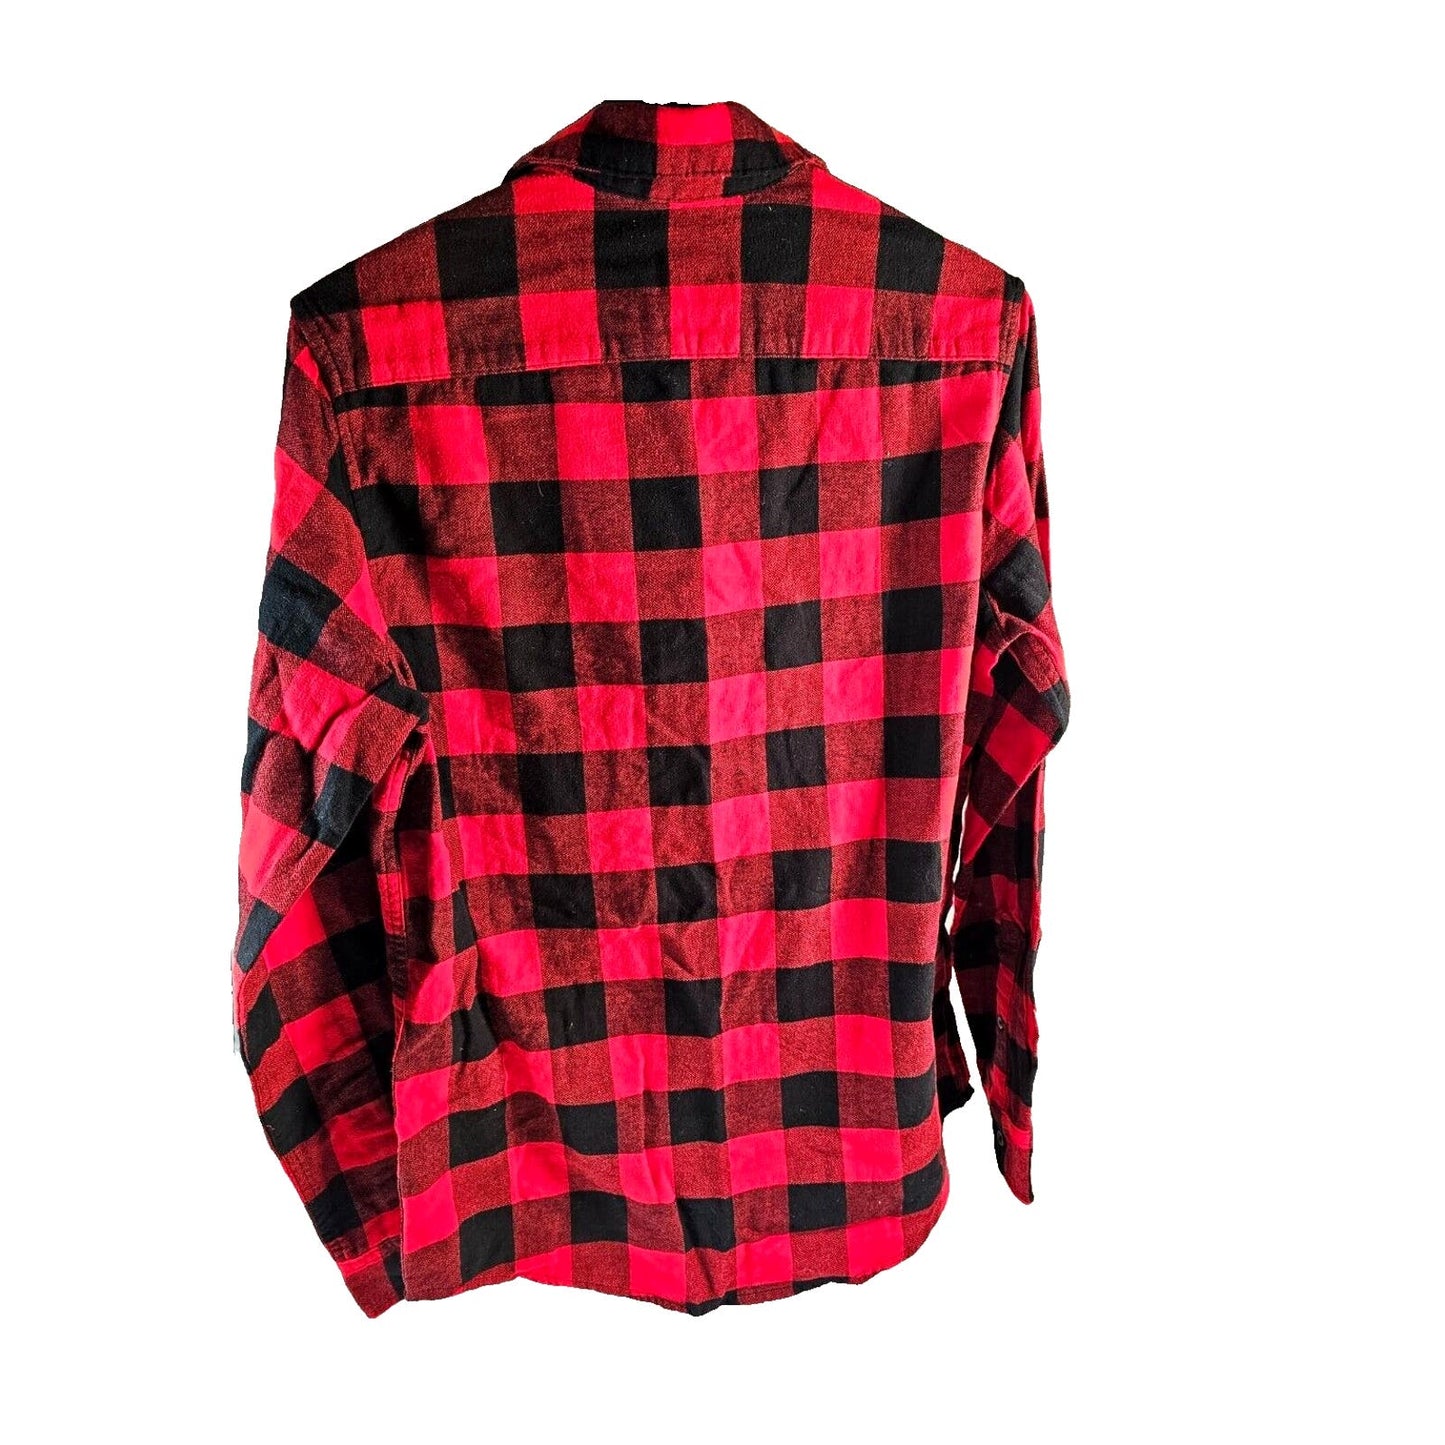 Goodfellow & Co Men's Red Plaid Heavyweight Standard Fit Flannel Shirt, Size S